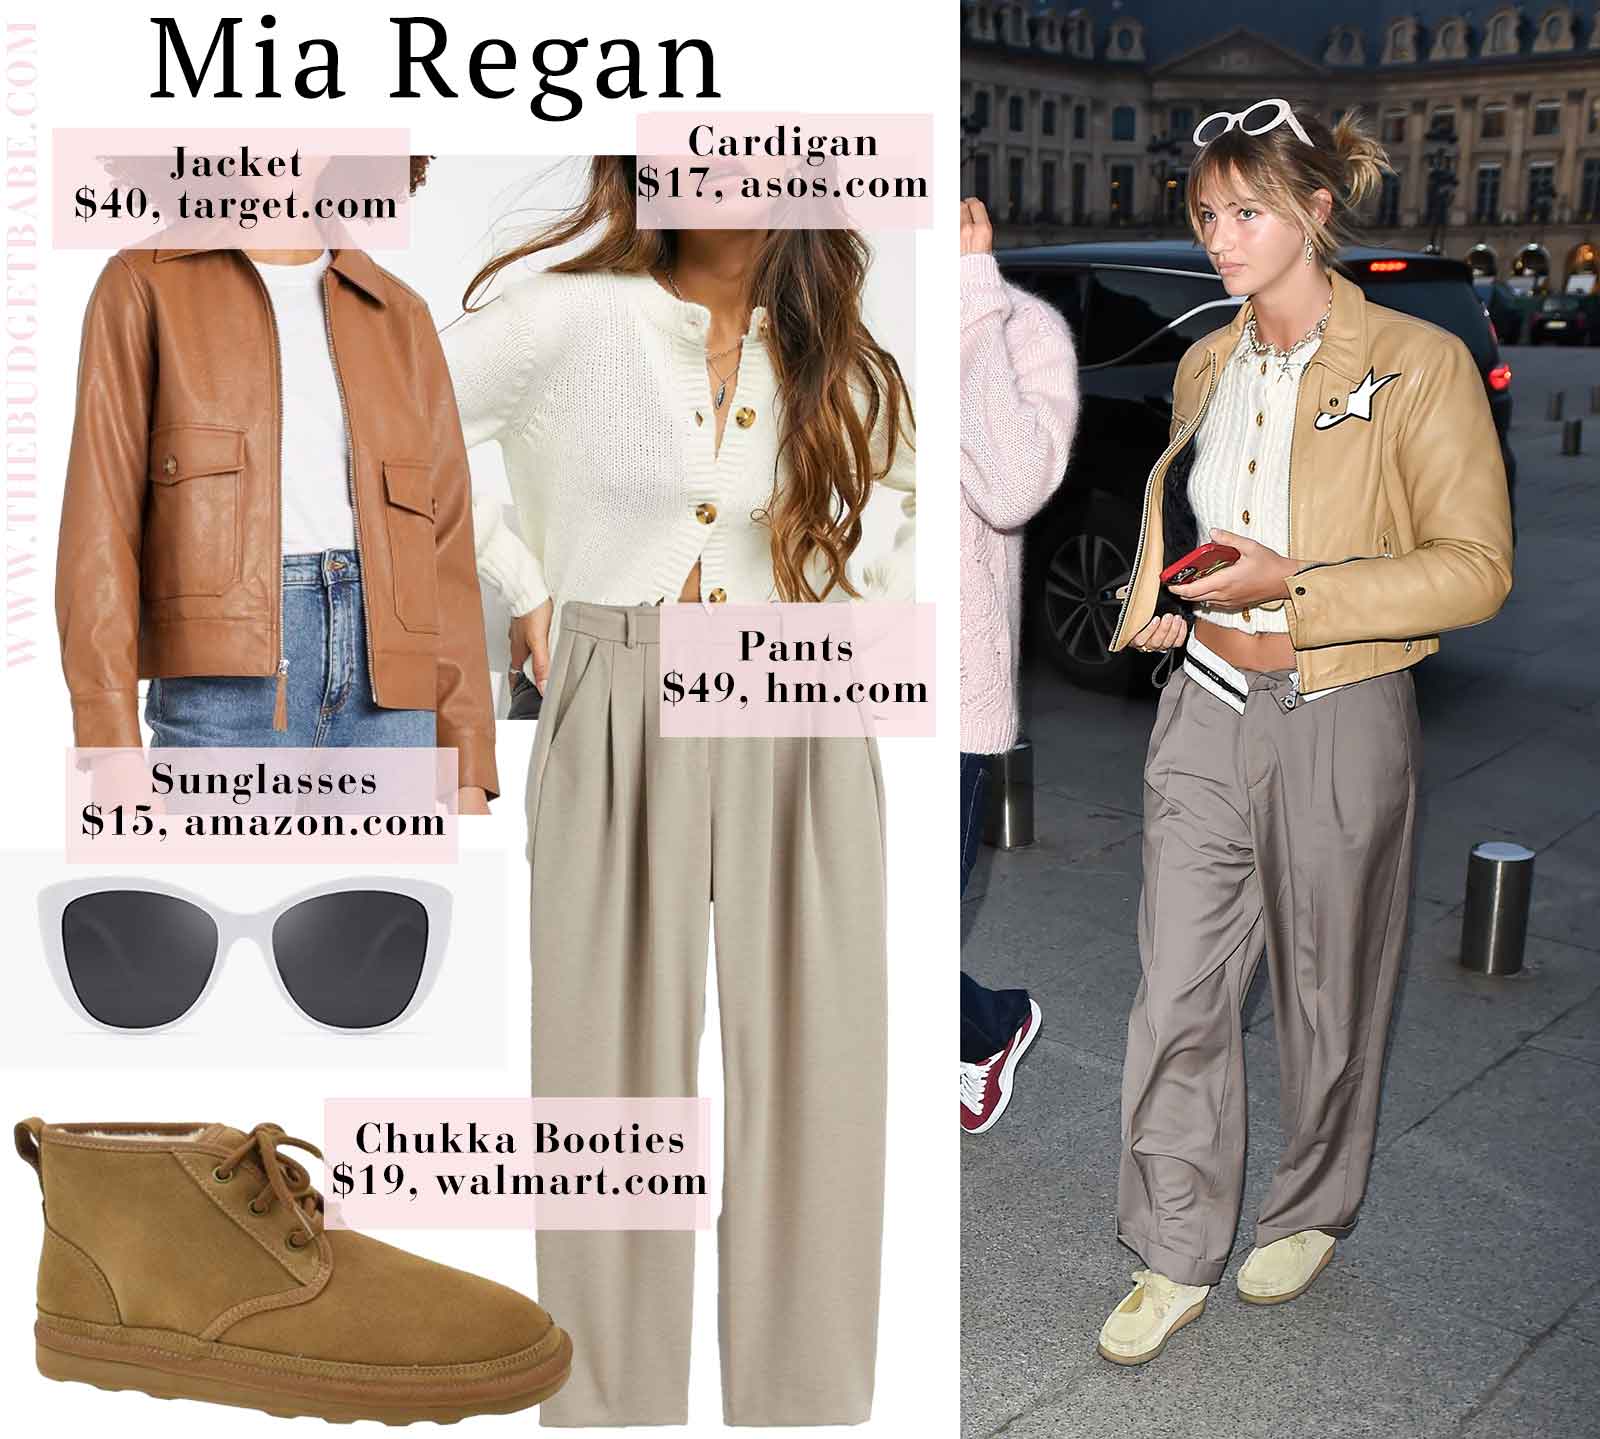 Mia Regan's wide leg pants and leather jacket look